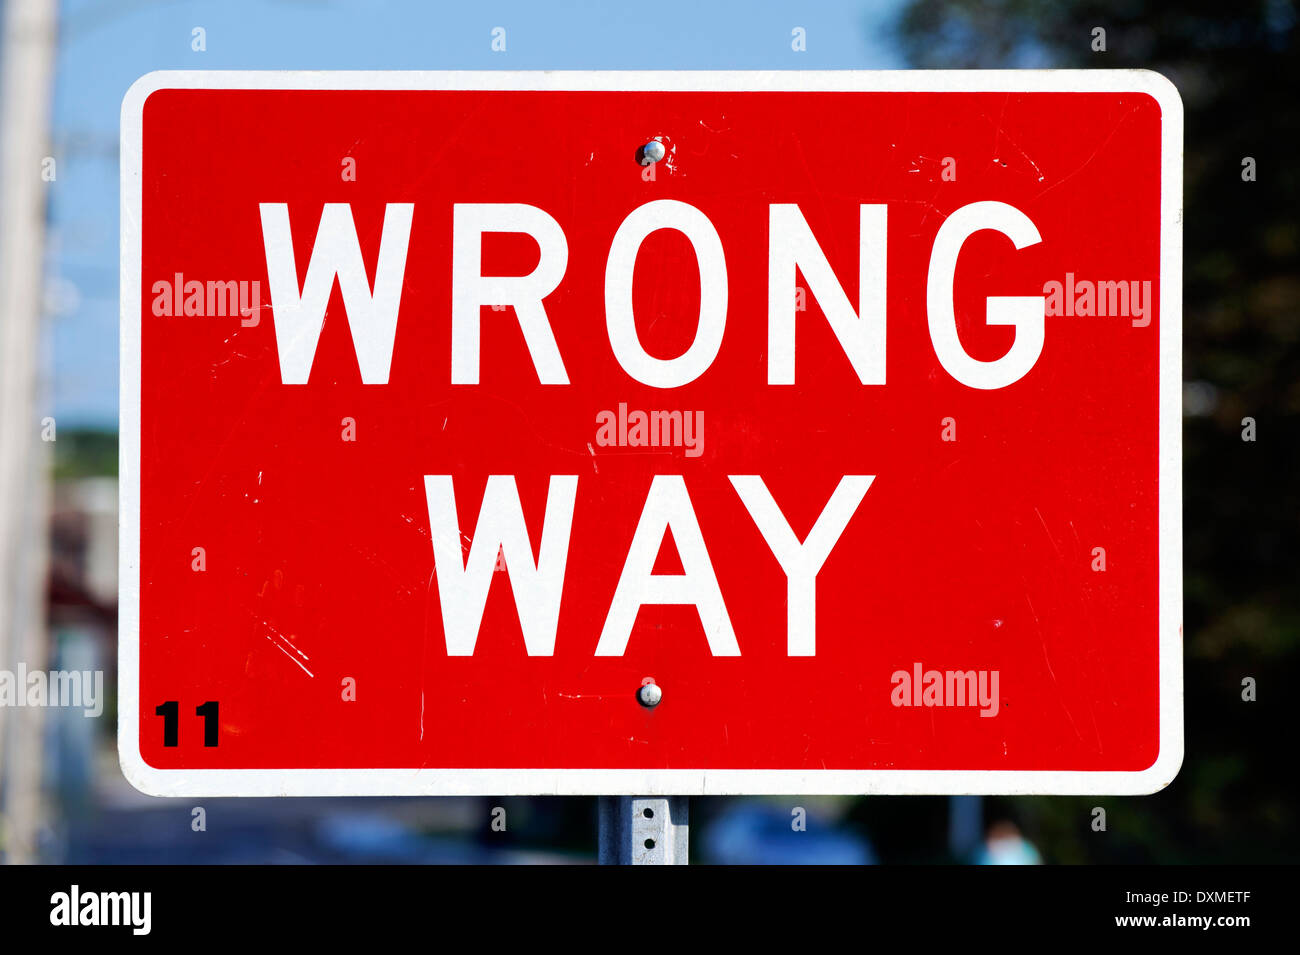 Wrong way traffic sign. Stock Photo